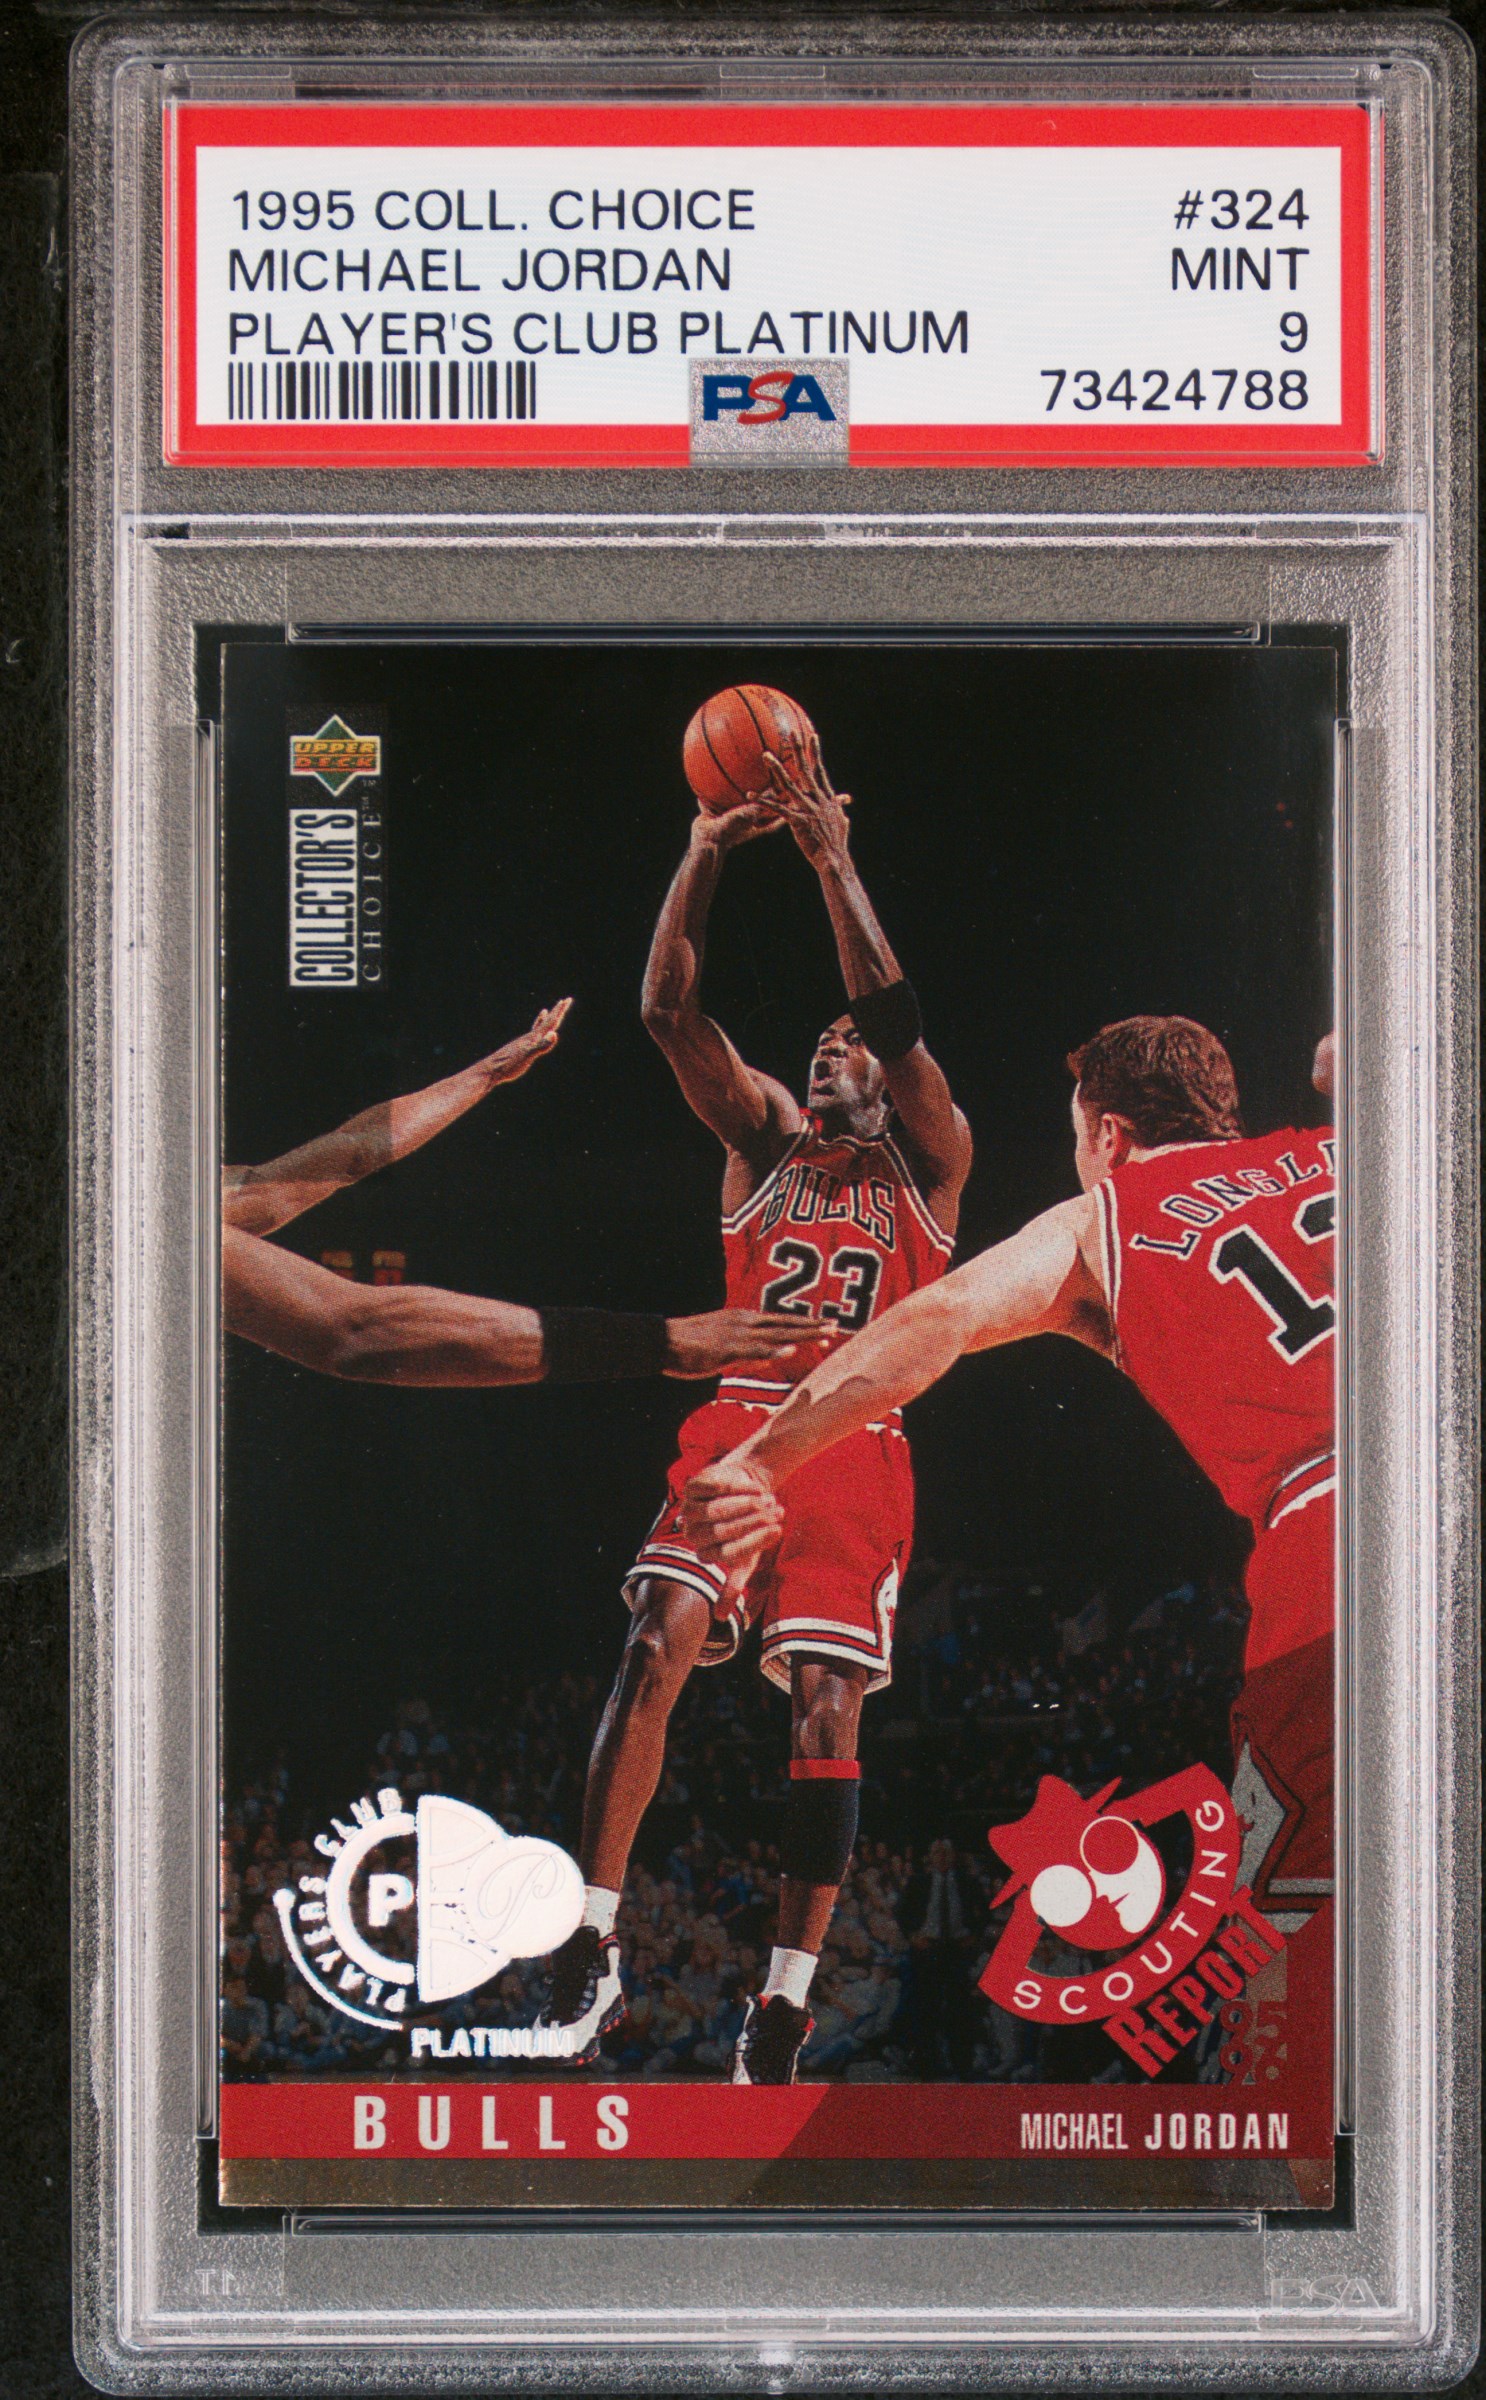 1995 Collector'S Choice Player'S Club Platinum 324 Michael Jordan – PSA MINT 9